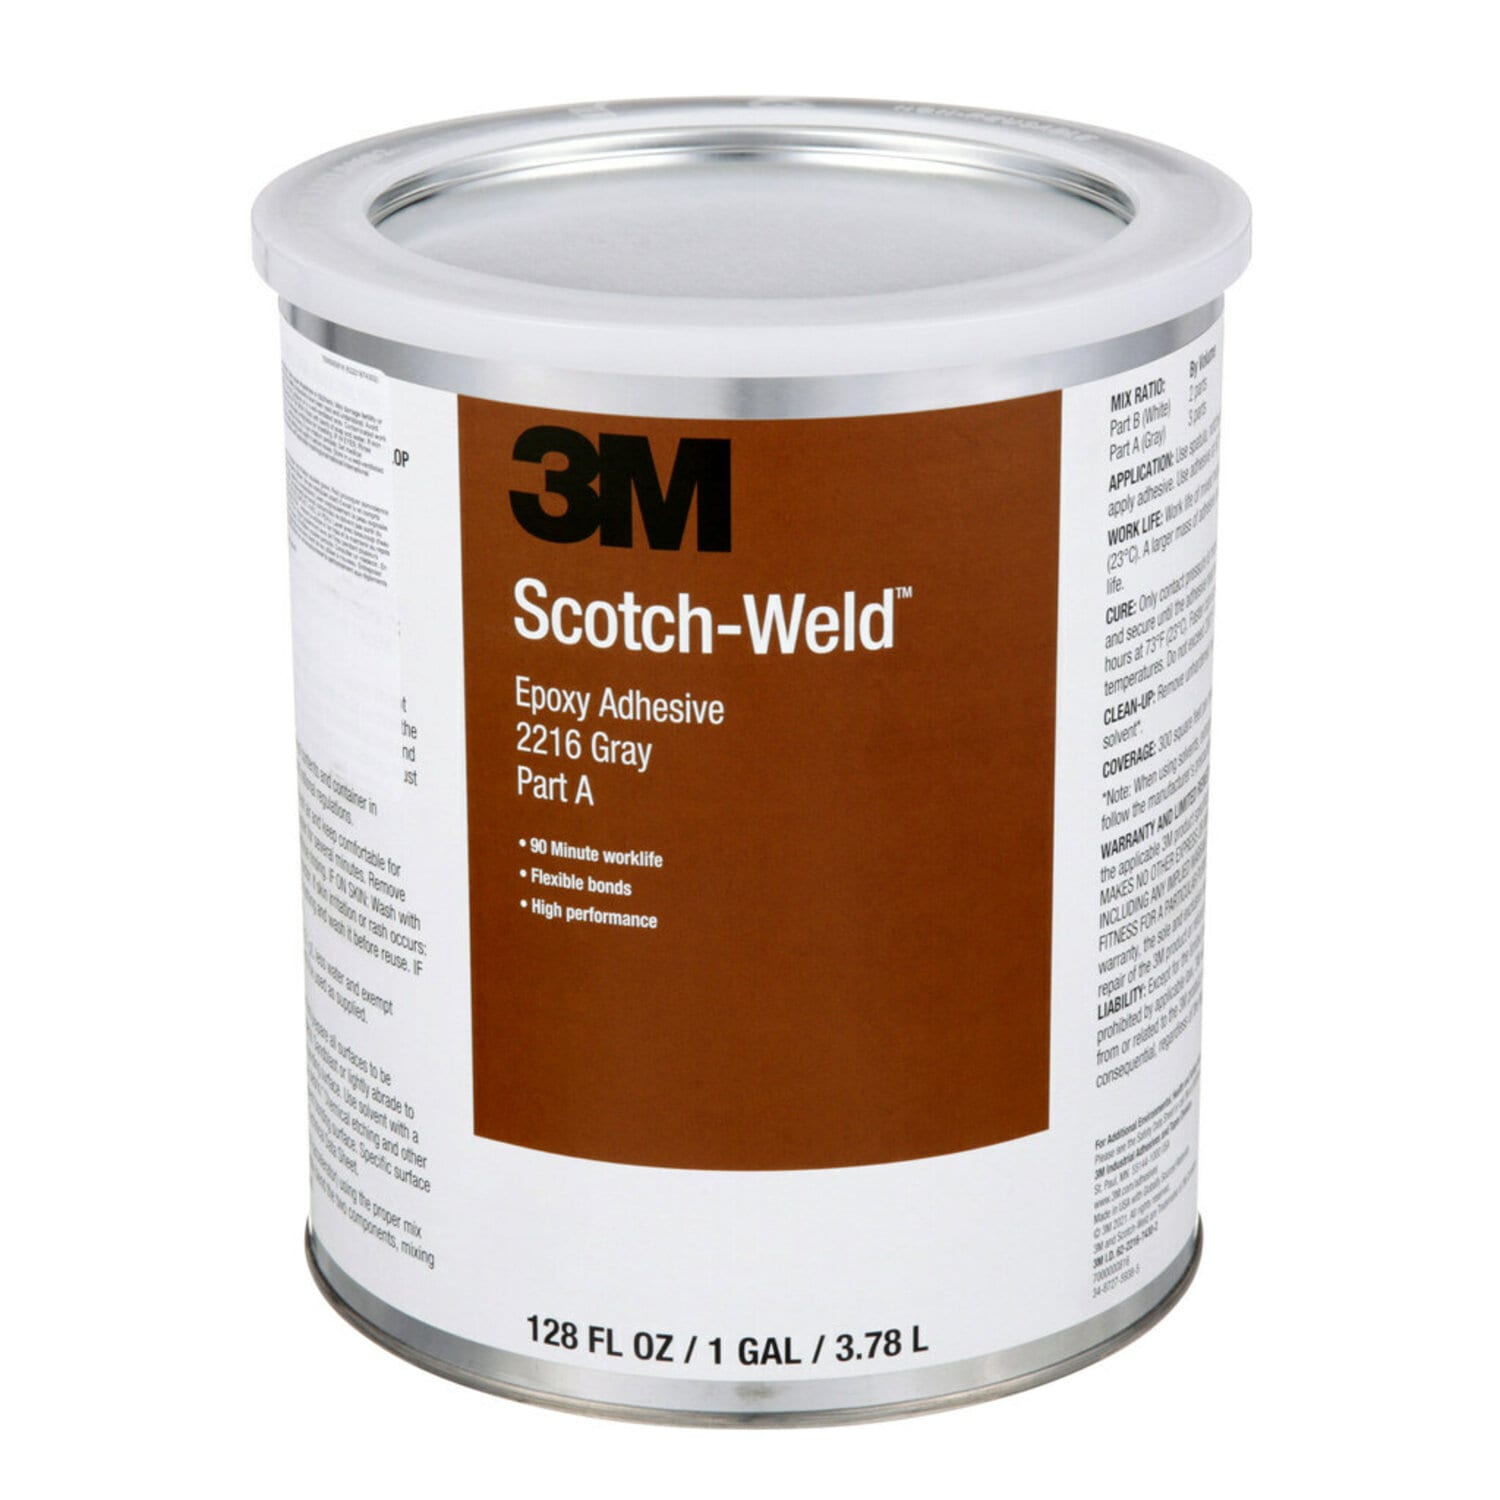 7000000816 - 3M Scotch-Weld Epoxy Adhesive 2216, Gray, Part B/A, 1 Gallon, 2
Kit/Case